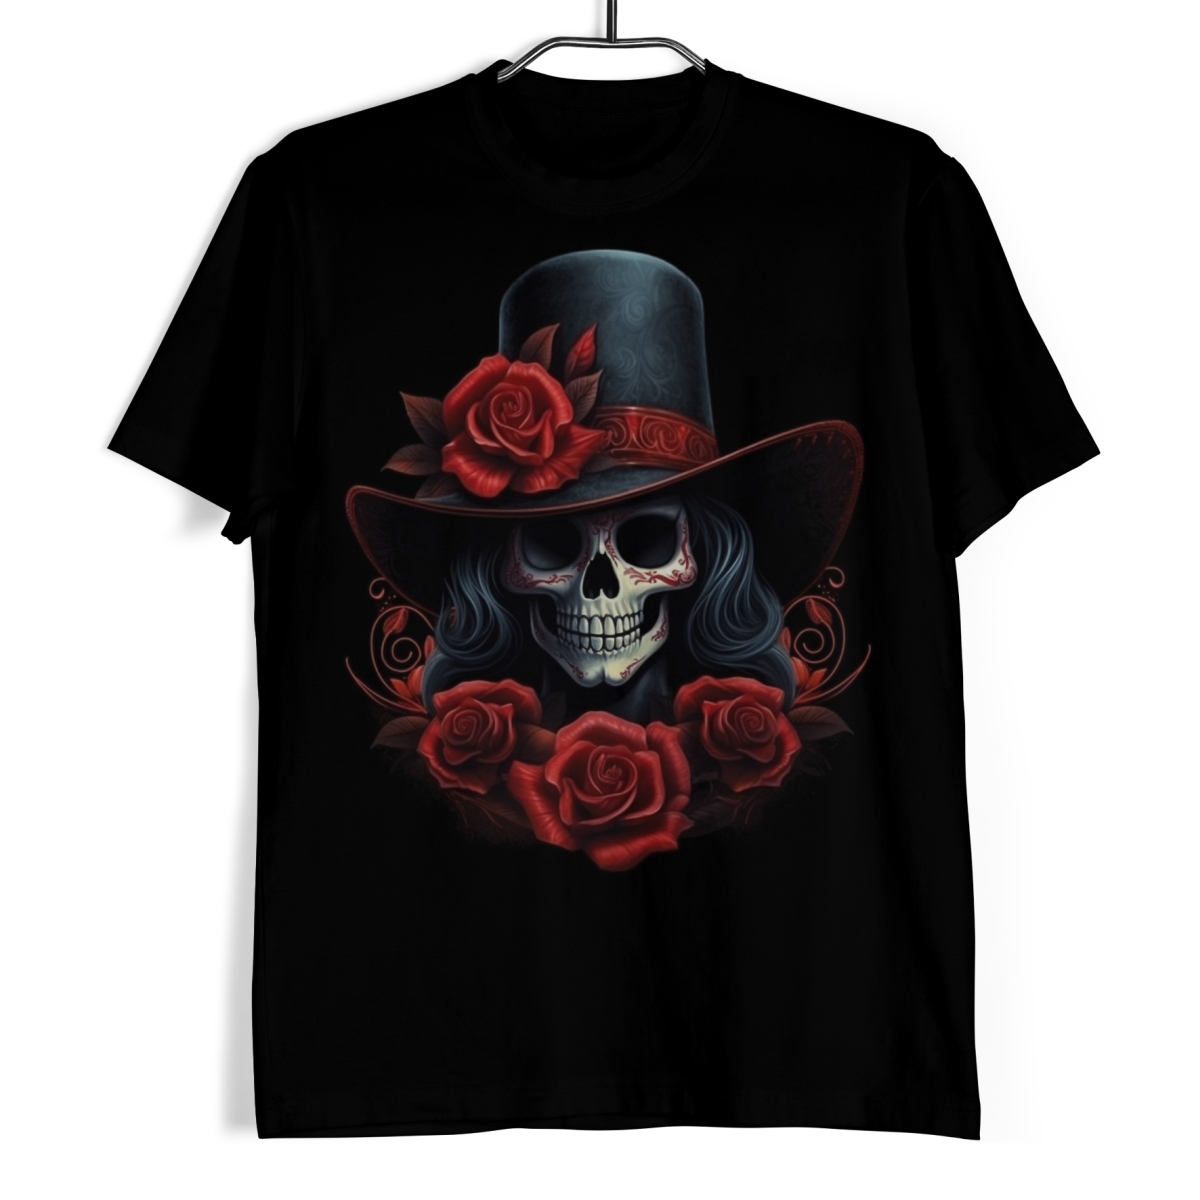 Tričko s lebkou - Dáma s růžemi XL